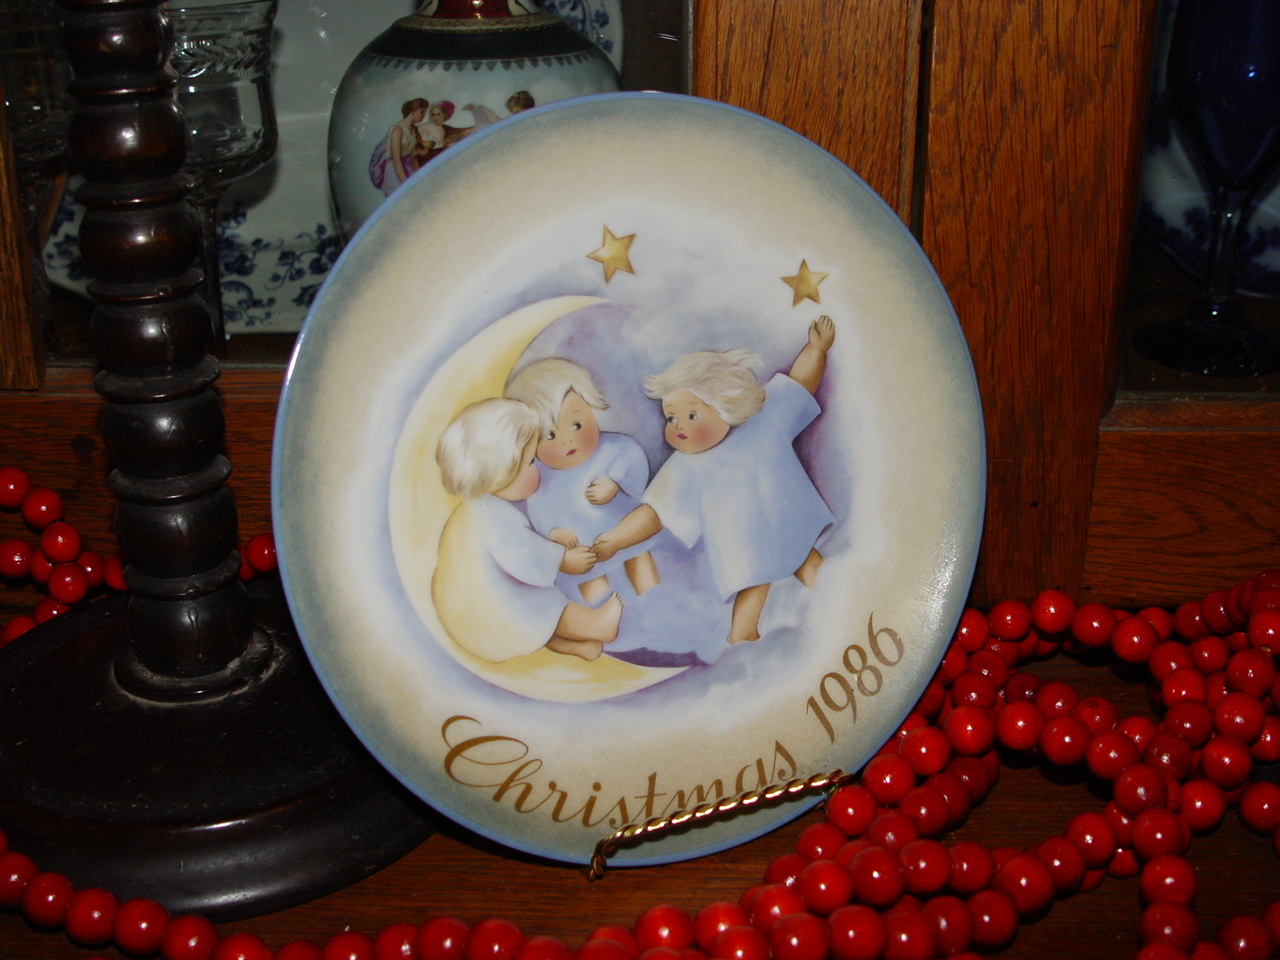 Schmid 1986
                                        Christmas Plate Tell The Heavens
                                        Berta Hummel by F.X. Schmid ~
                                        Great Gift idea